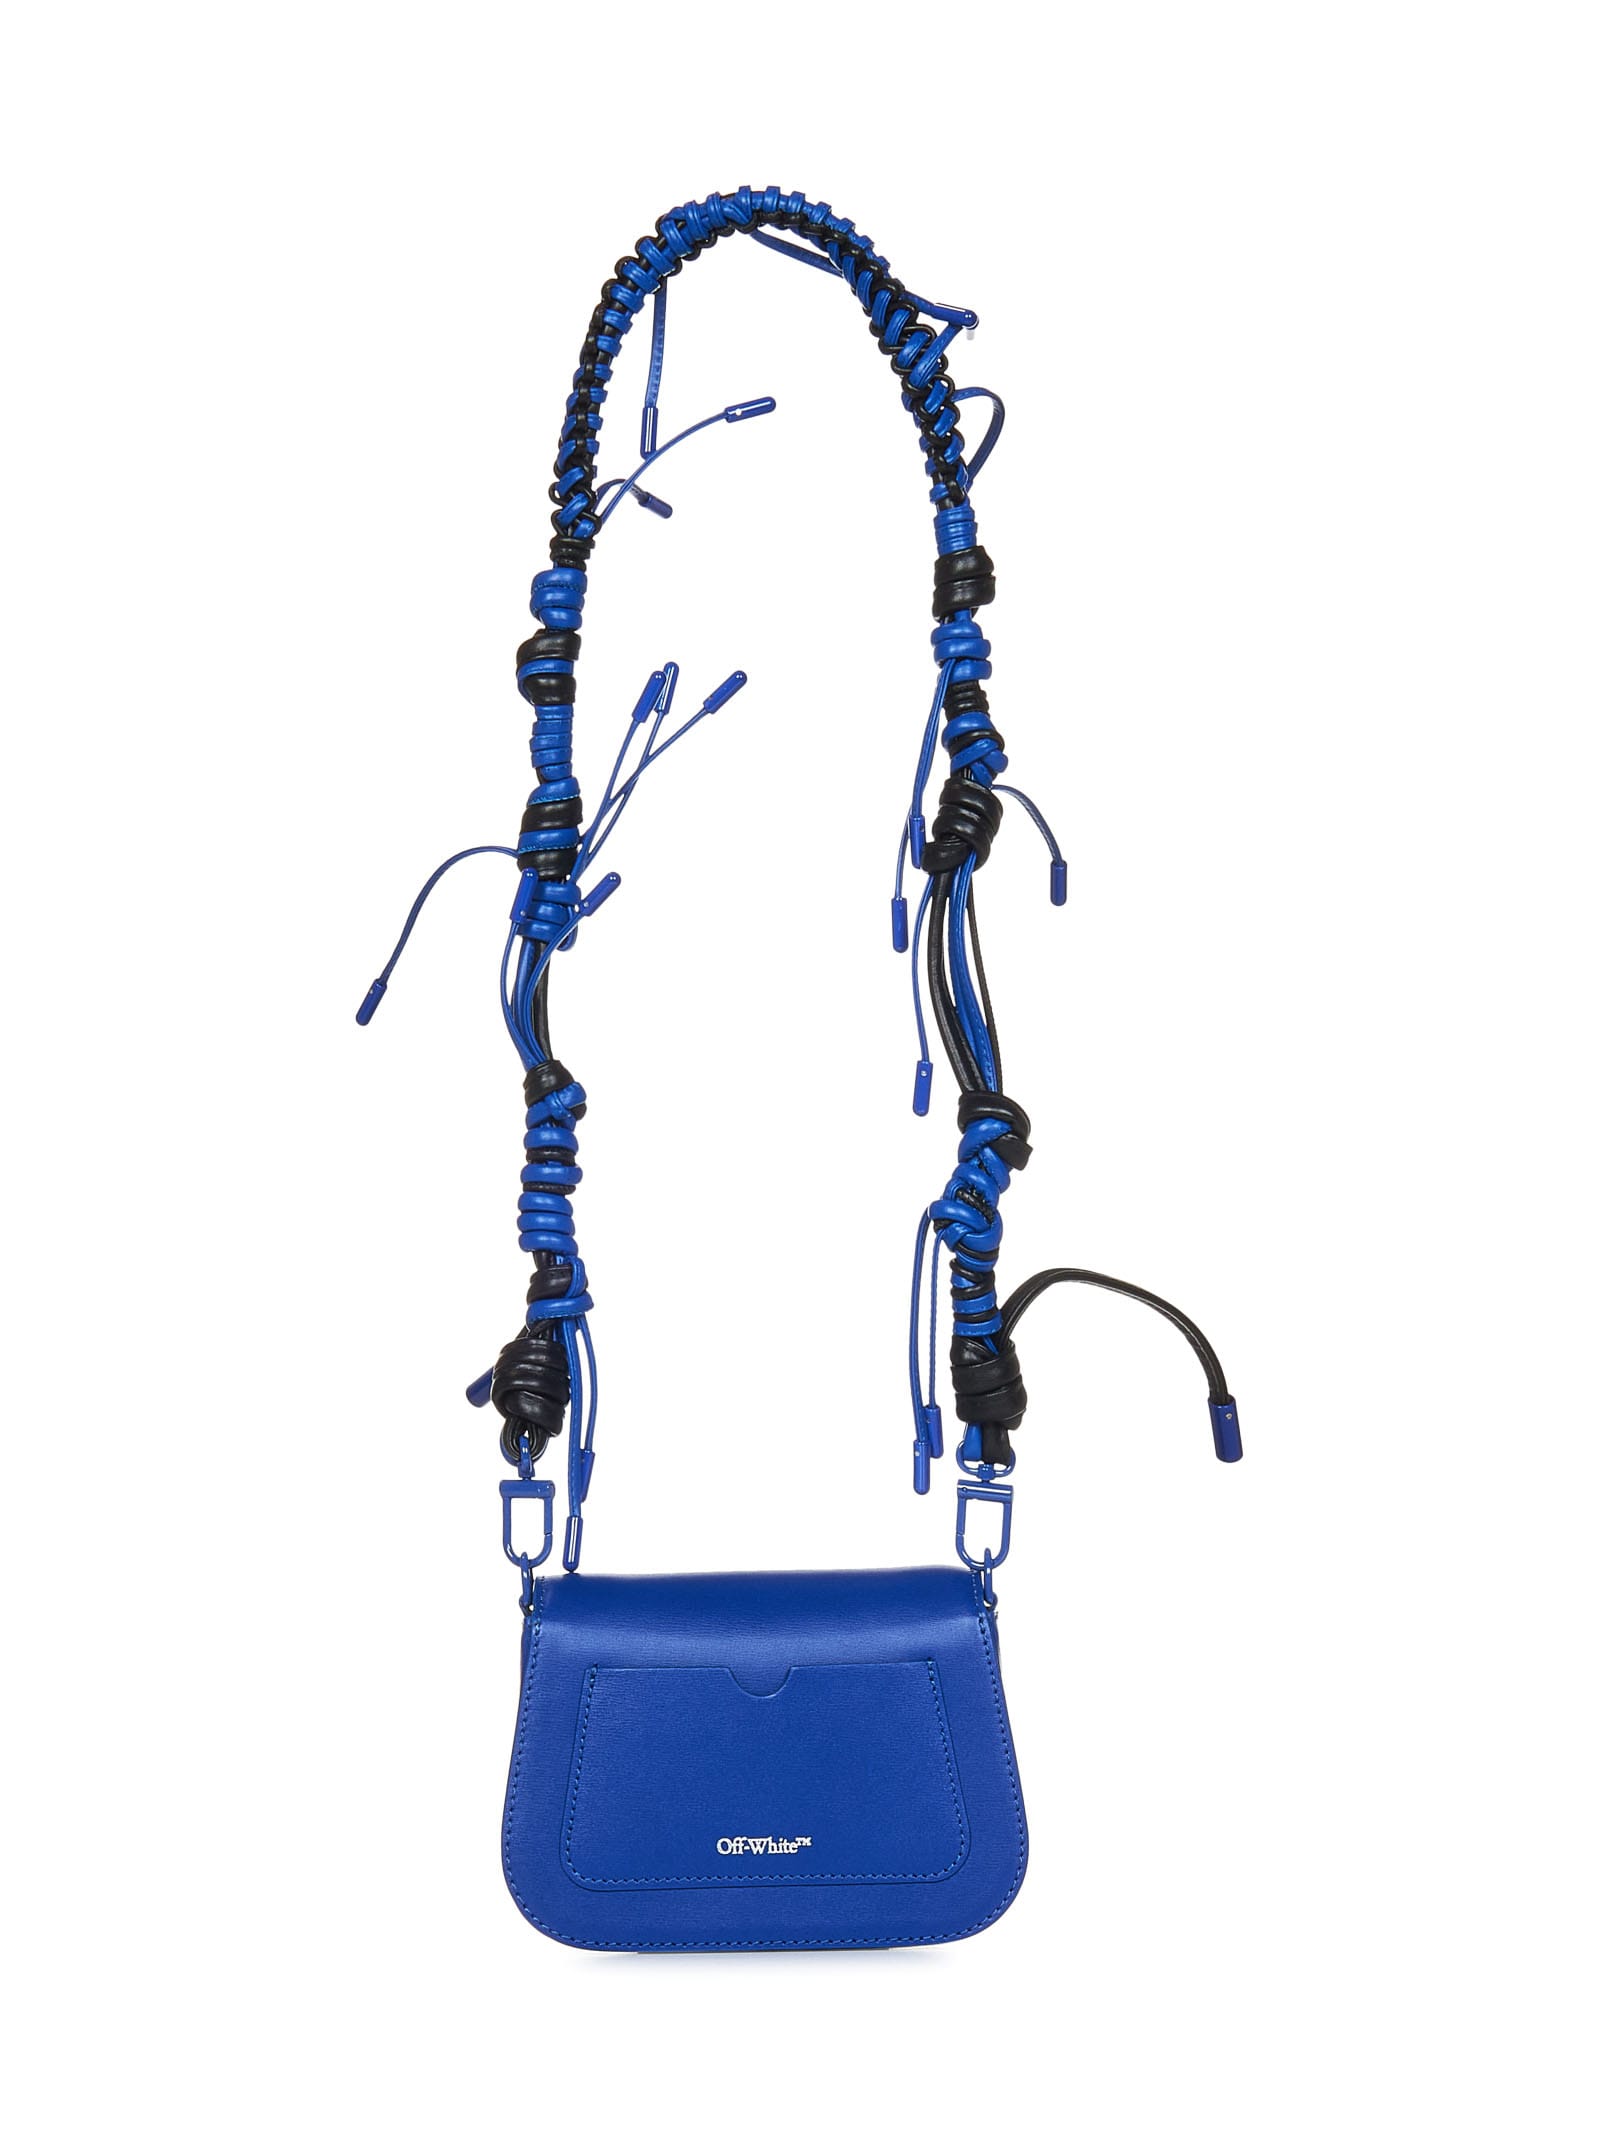 Skeleton Binder Small Crossbody Bag in Blue - Off White